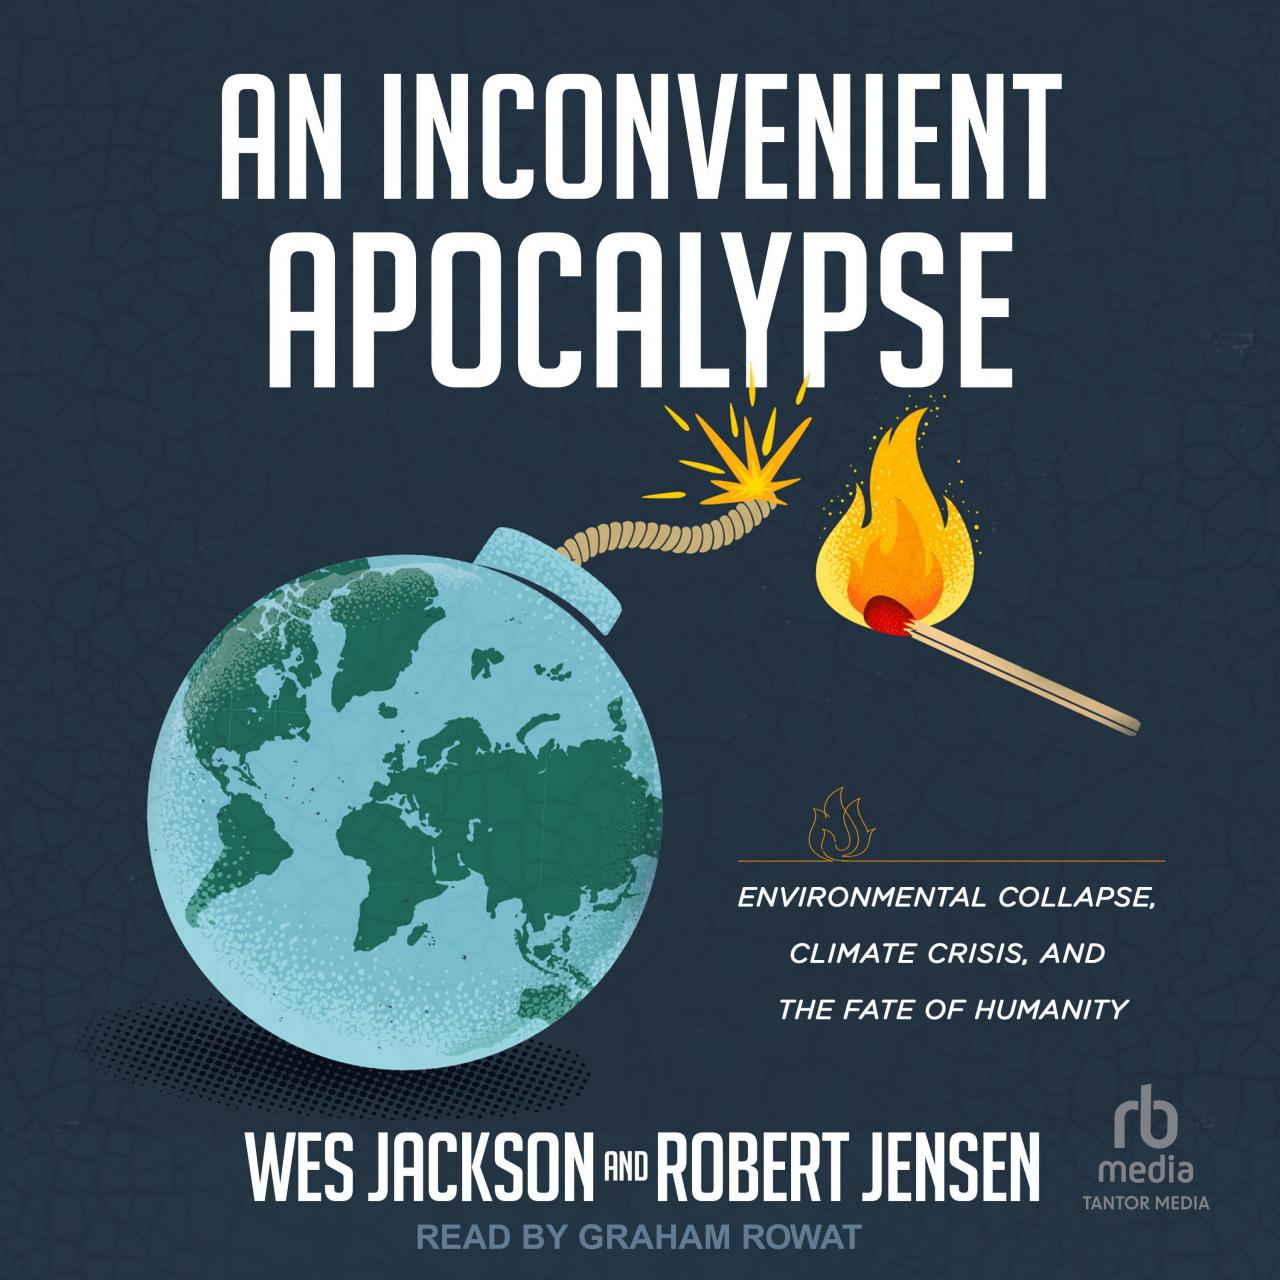 An inconvenient apocalypse book